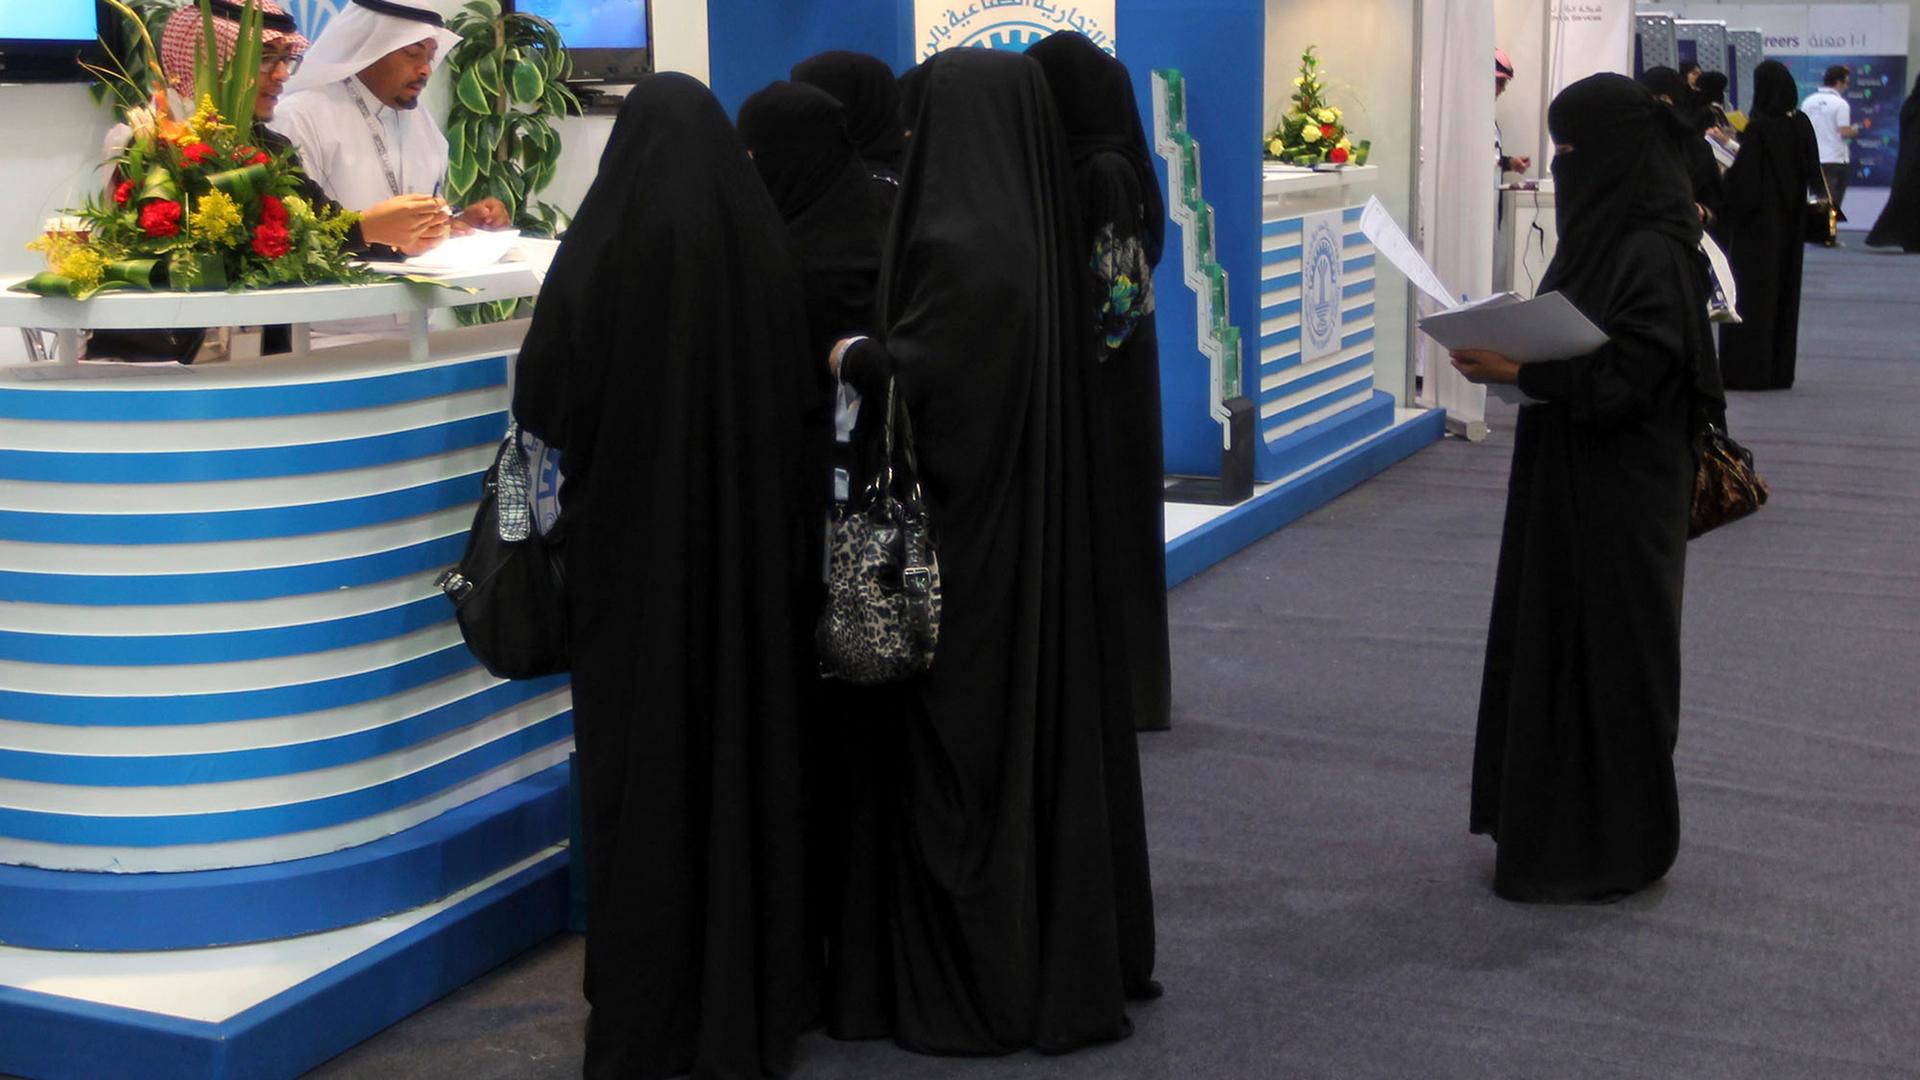 Saudi Arabian women, seeking a job, talk with recruiters during a job fair in Riyadh.